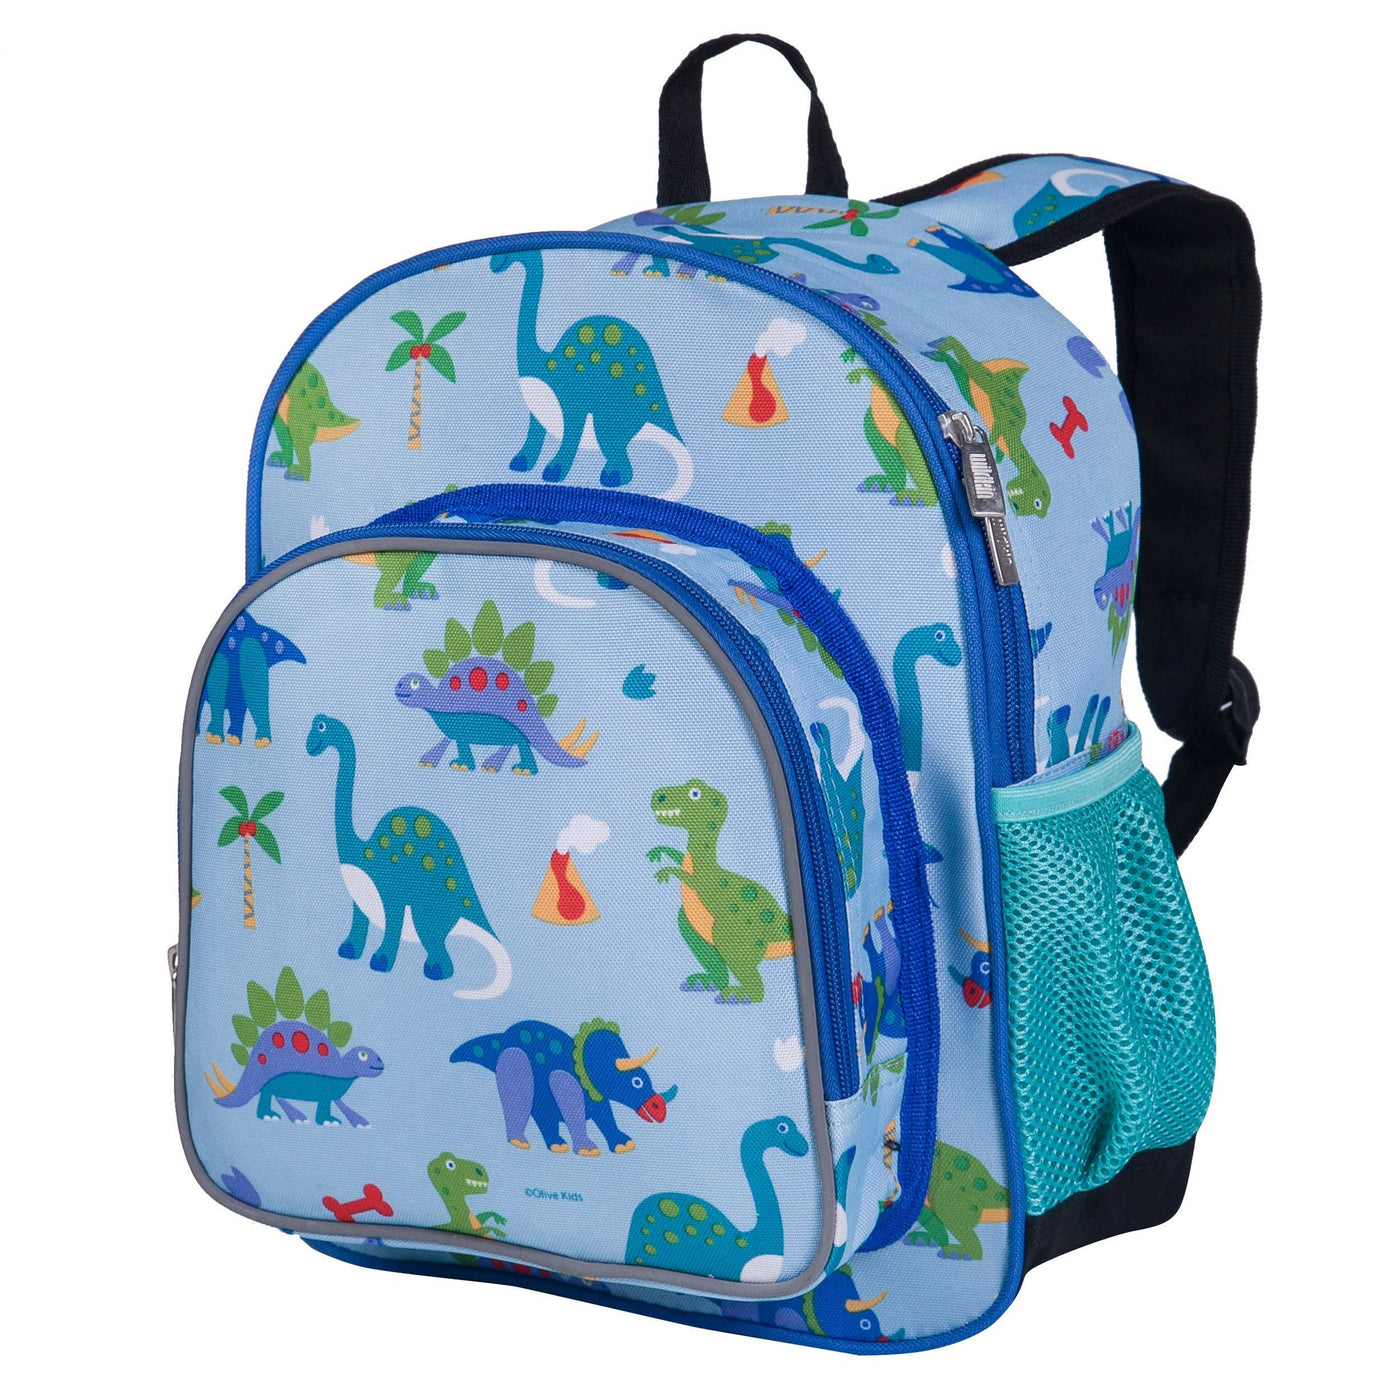 Dinosaur Land Backpack - 12 Inch